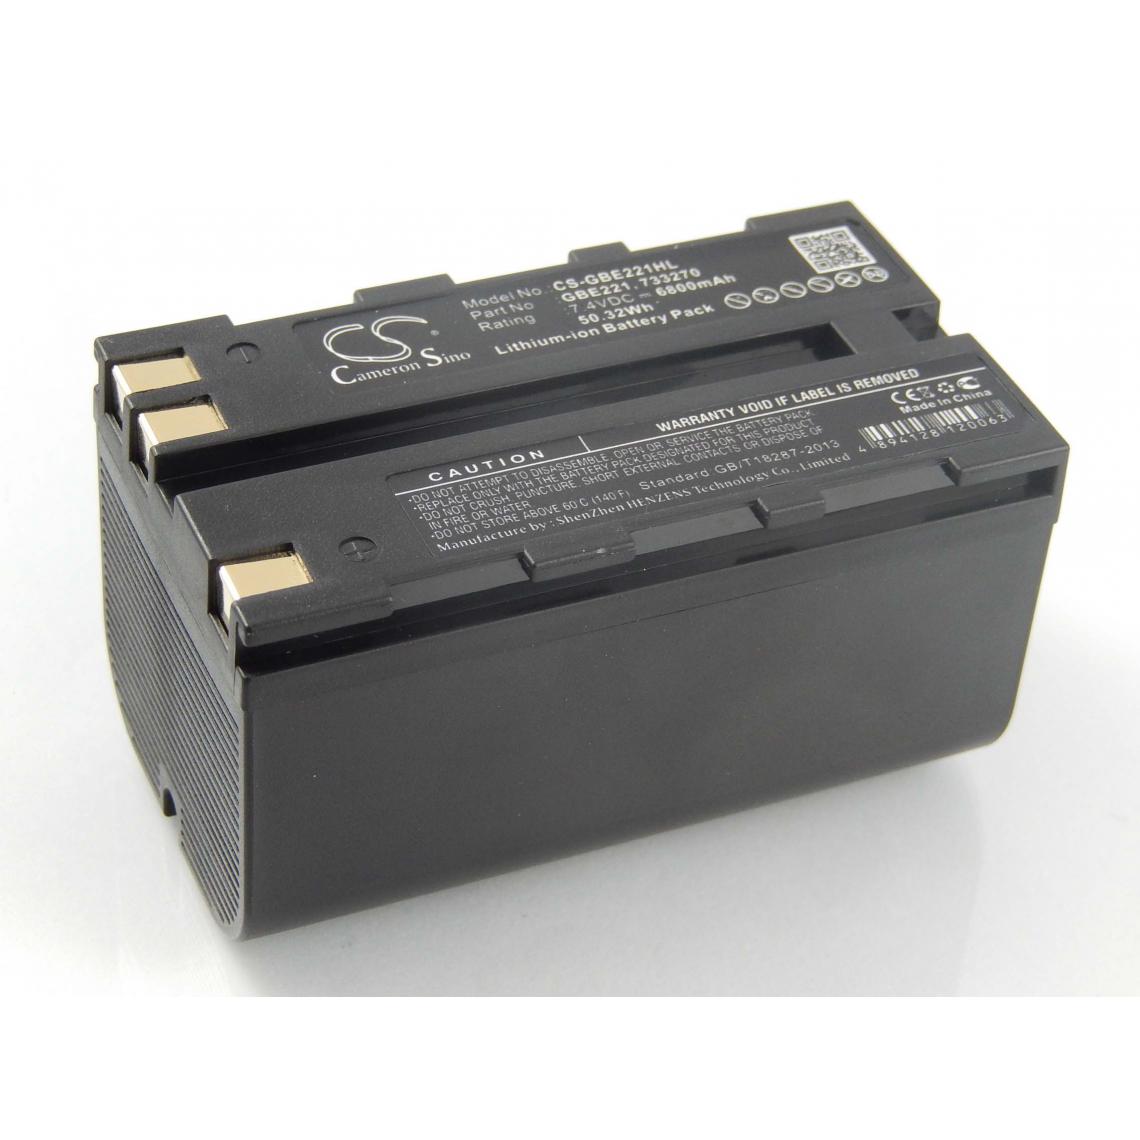 Vhbw - vhbw Batterie compatible avec Leica TC1102, TC1102C, TC1200 dispositif de mesure laser, outil de mesure (6800mAh, 7,4V, Li-ion) - Piles rechargeables